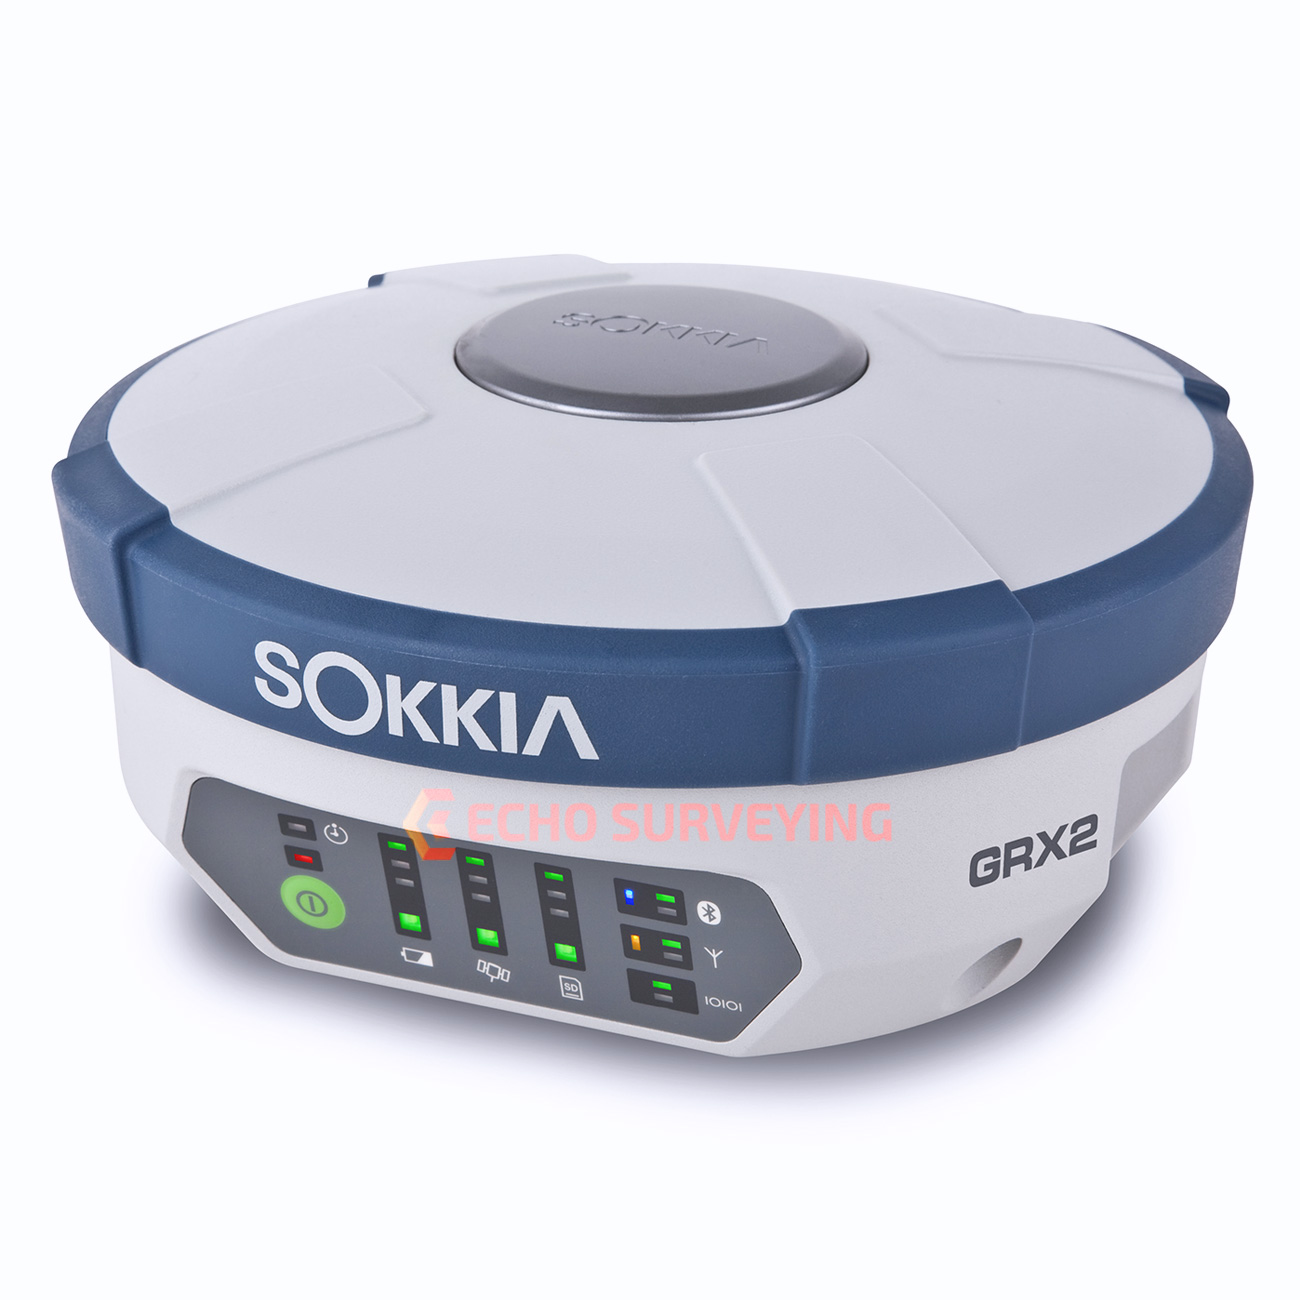 Sokkia-GRX2-Base-for-sale.jpg